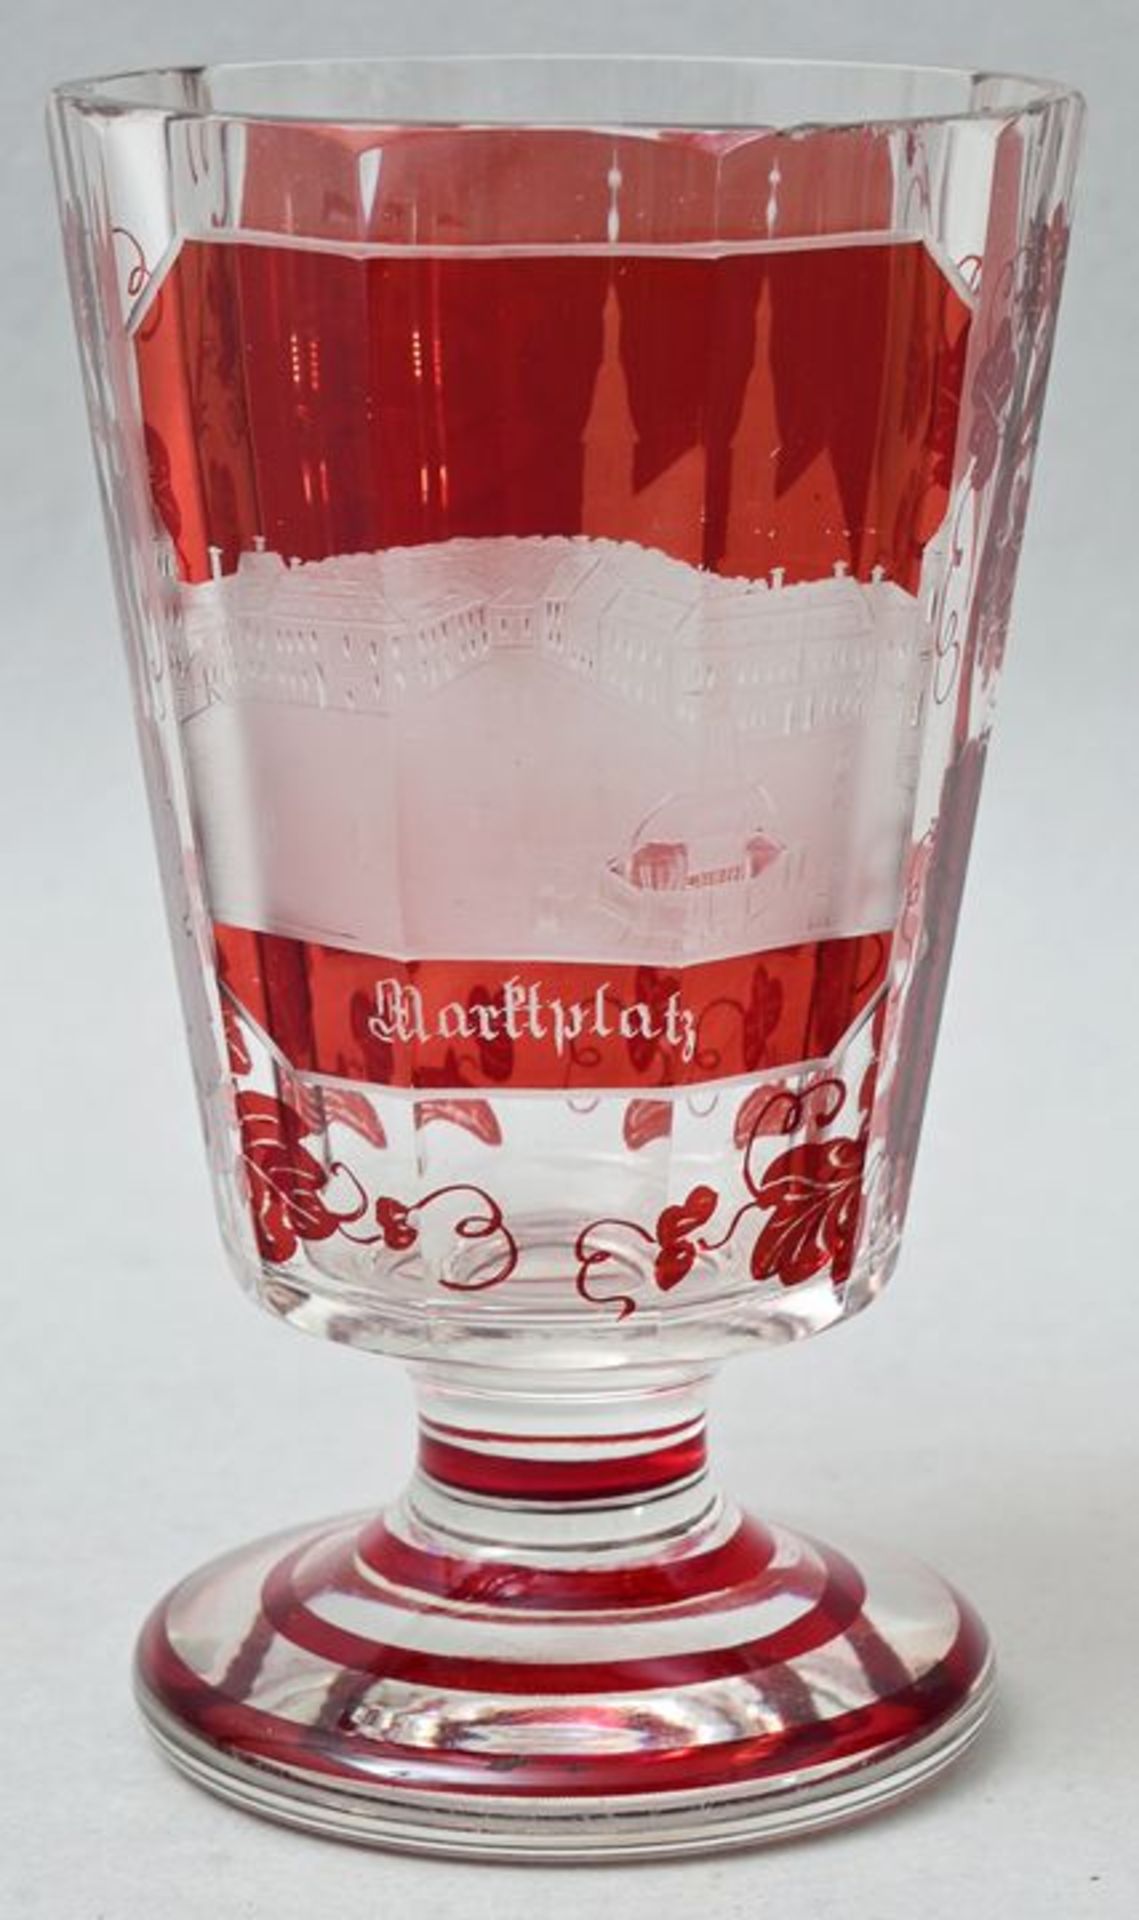 Andenken an Bad Salzungen/ glass goblet - Image 3 of 3